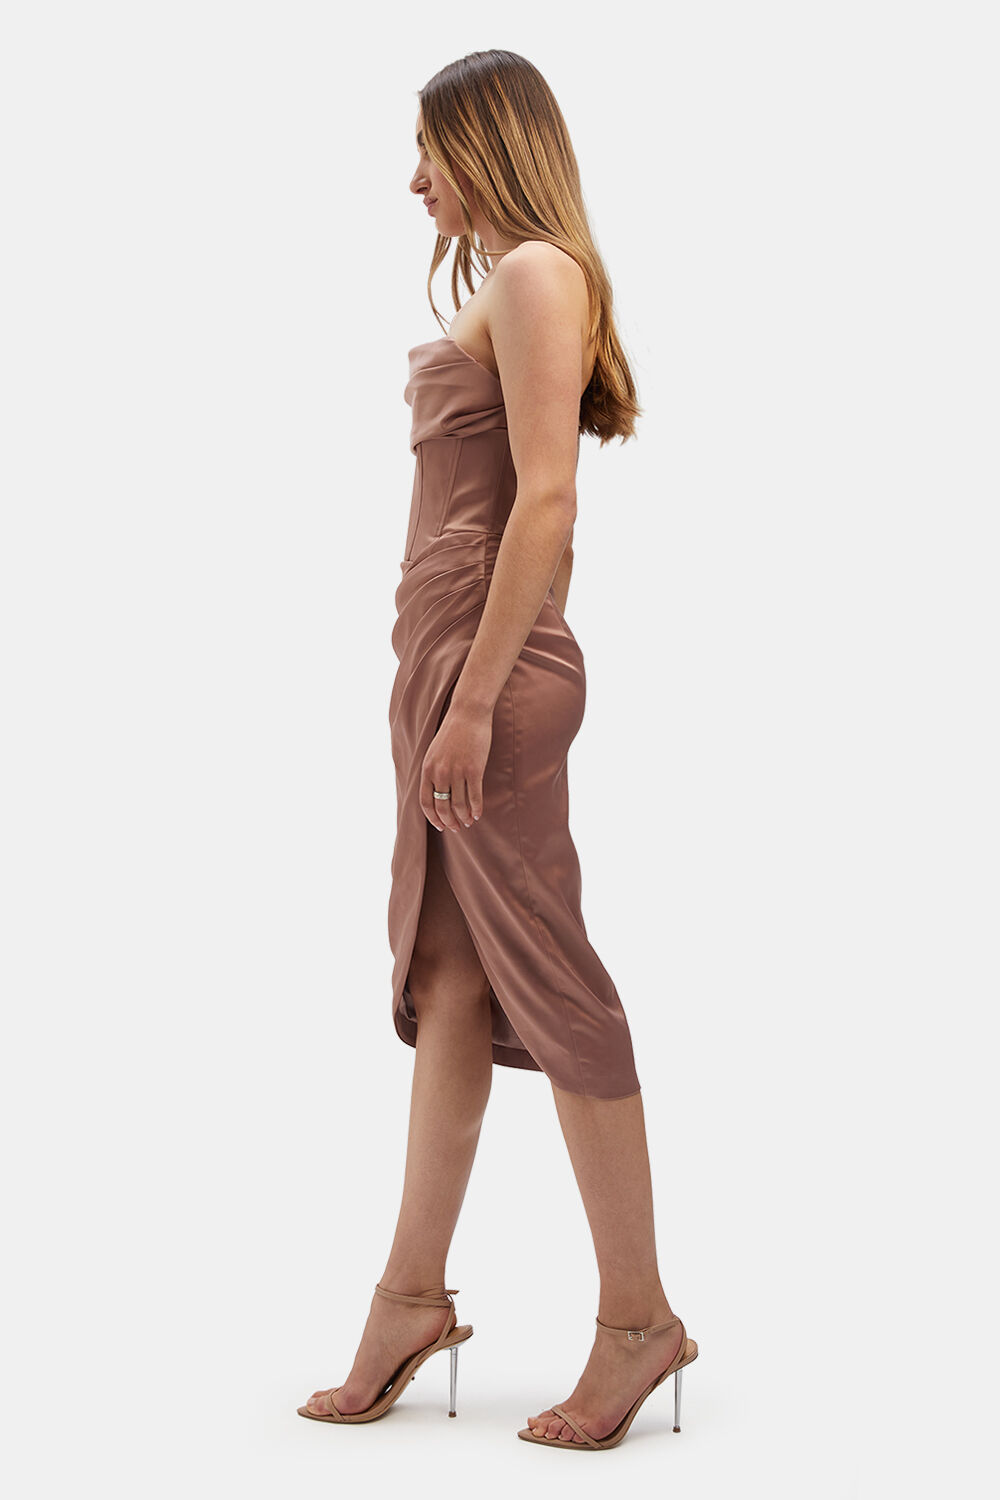 JAMILA CORSET DRESS in colour SAND DOLLAR